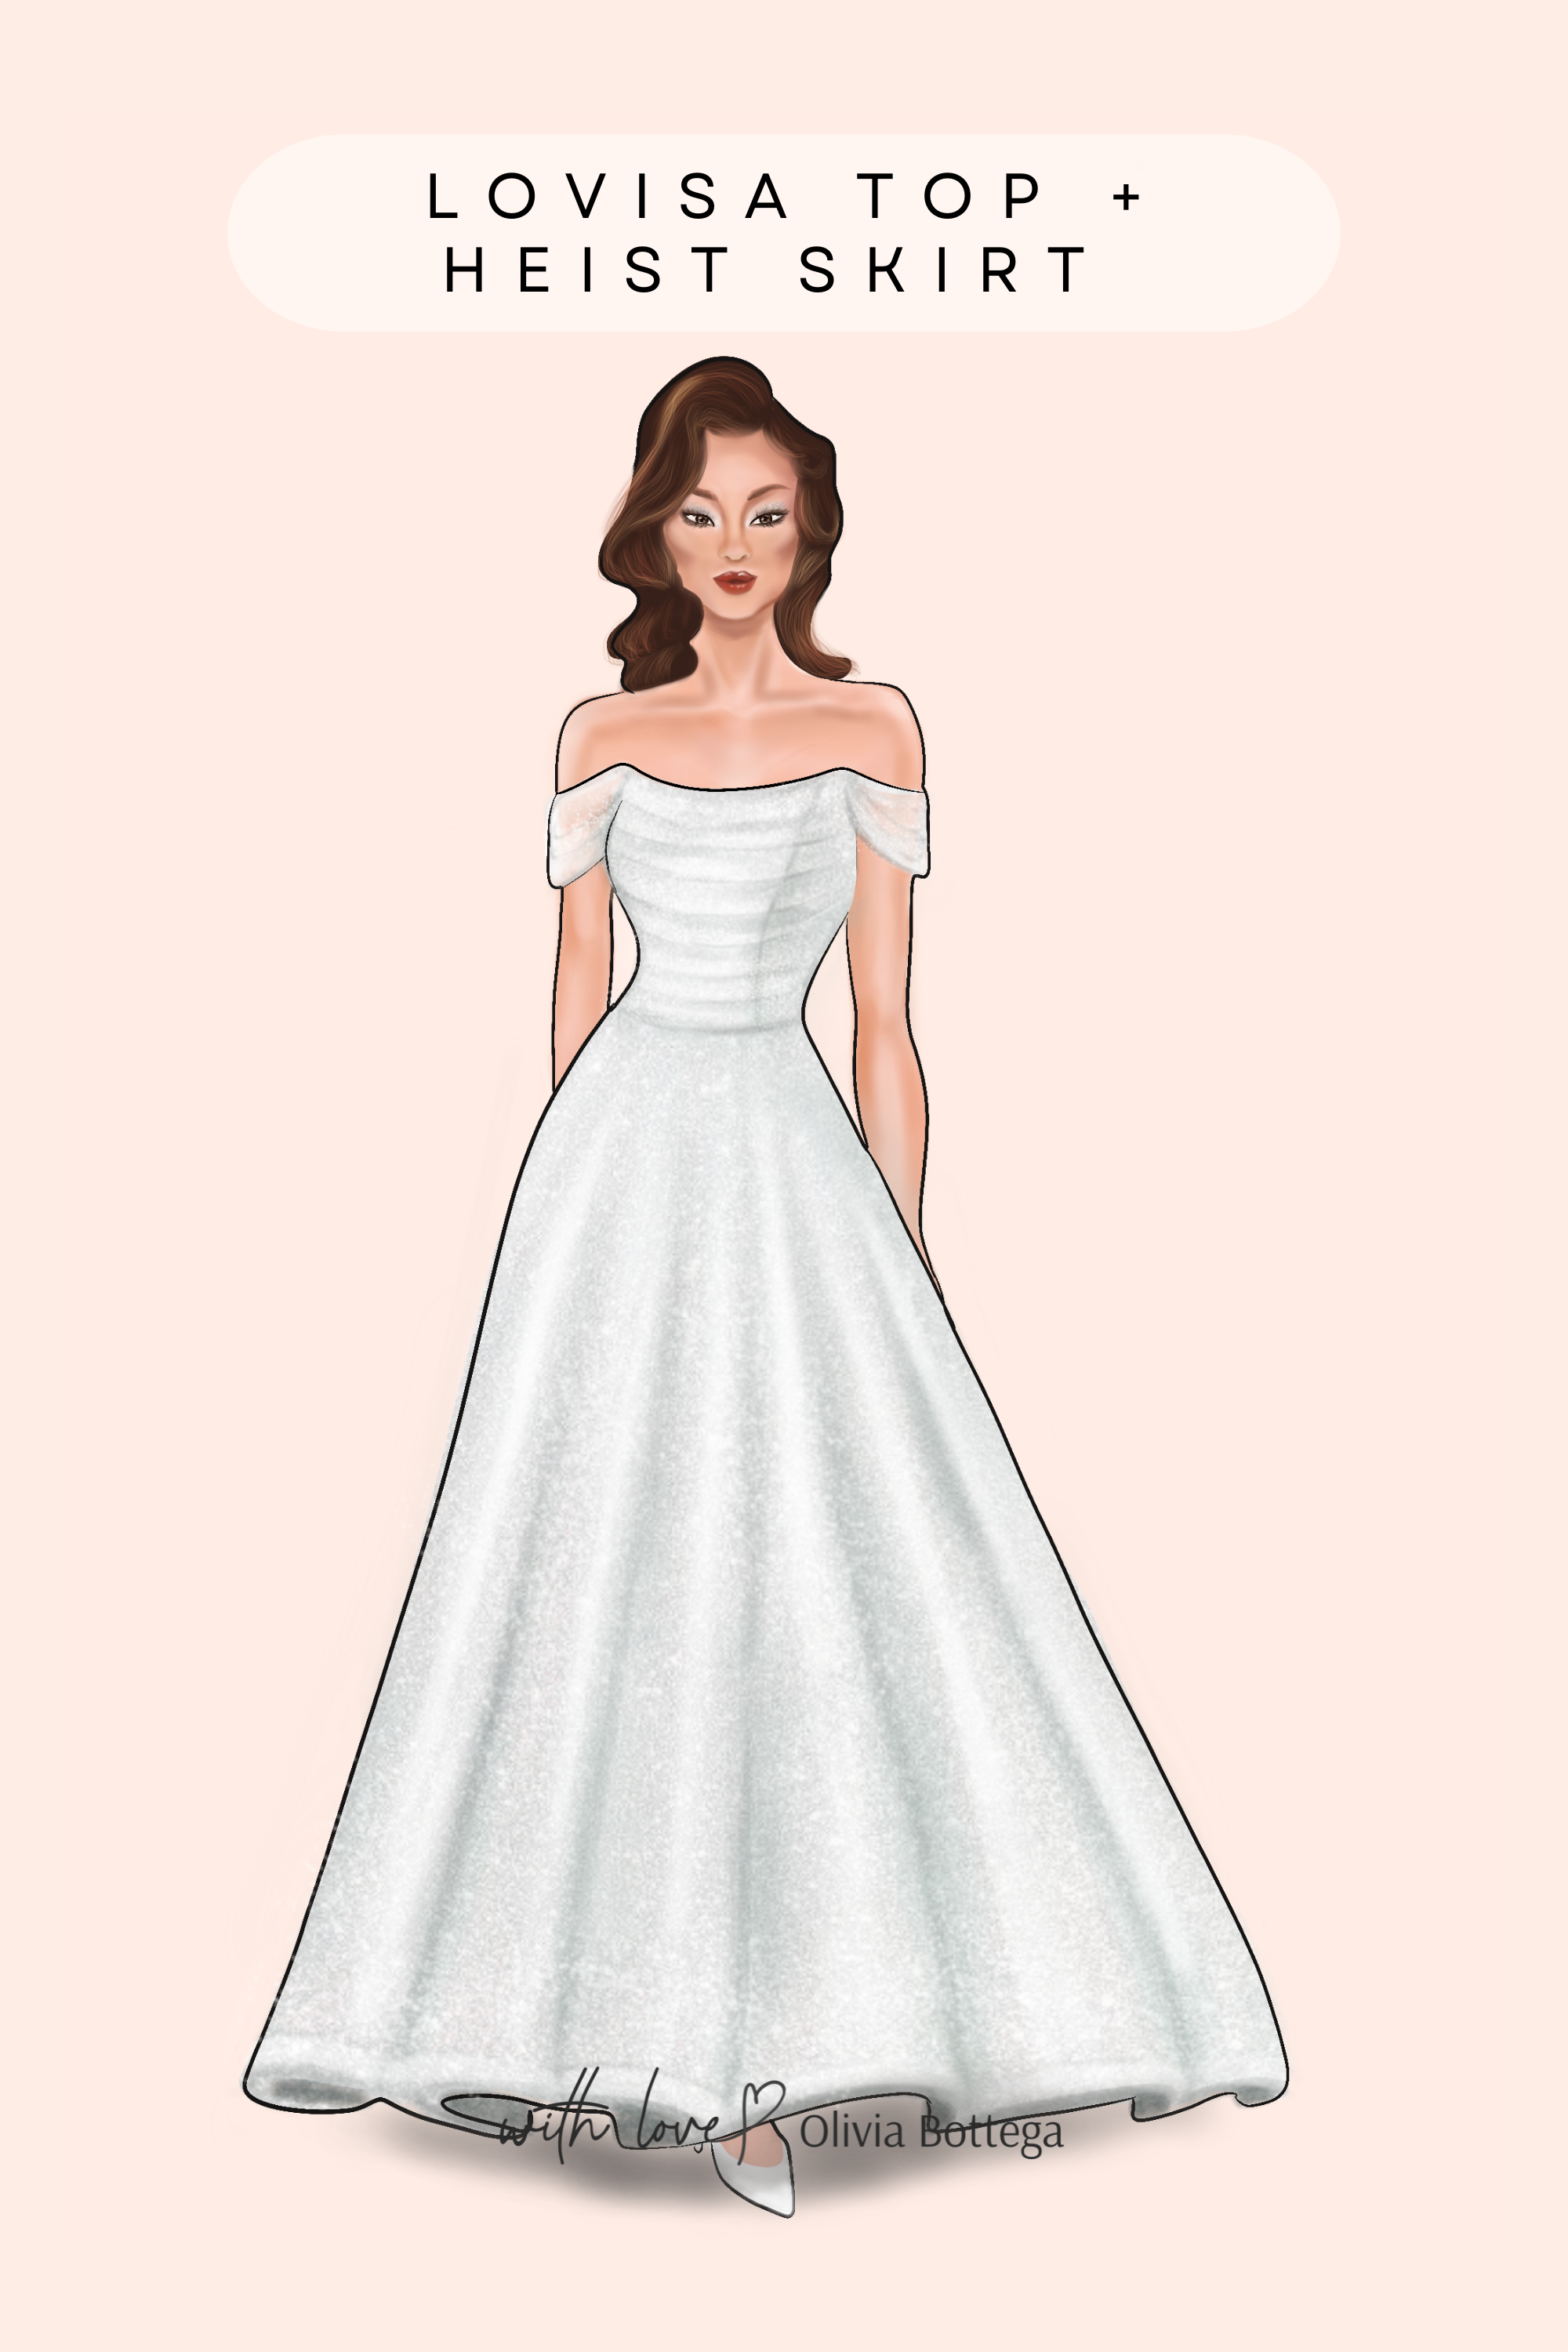 Check Out This Wedding Dress Sketch for Kim Kardashian